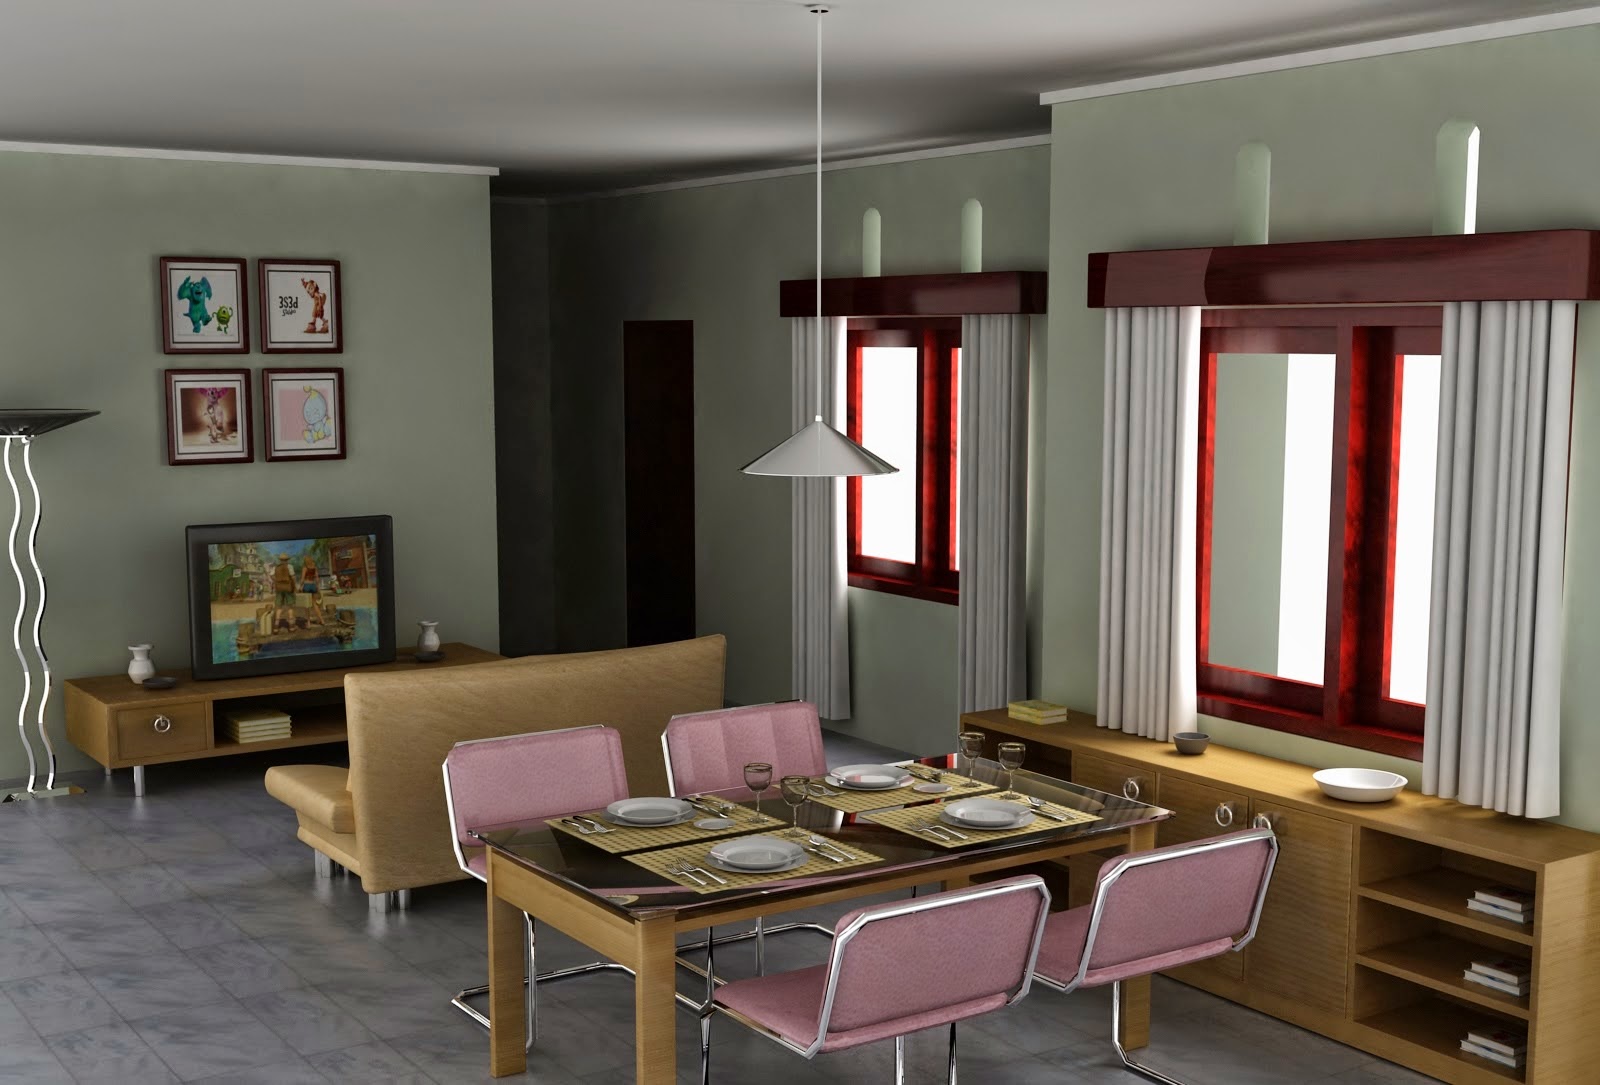 Contoh desain ruang keluarga minimalis kecil sederhana ...